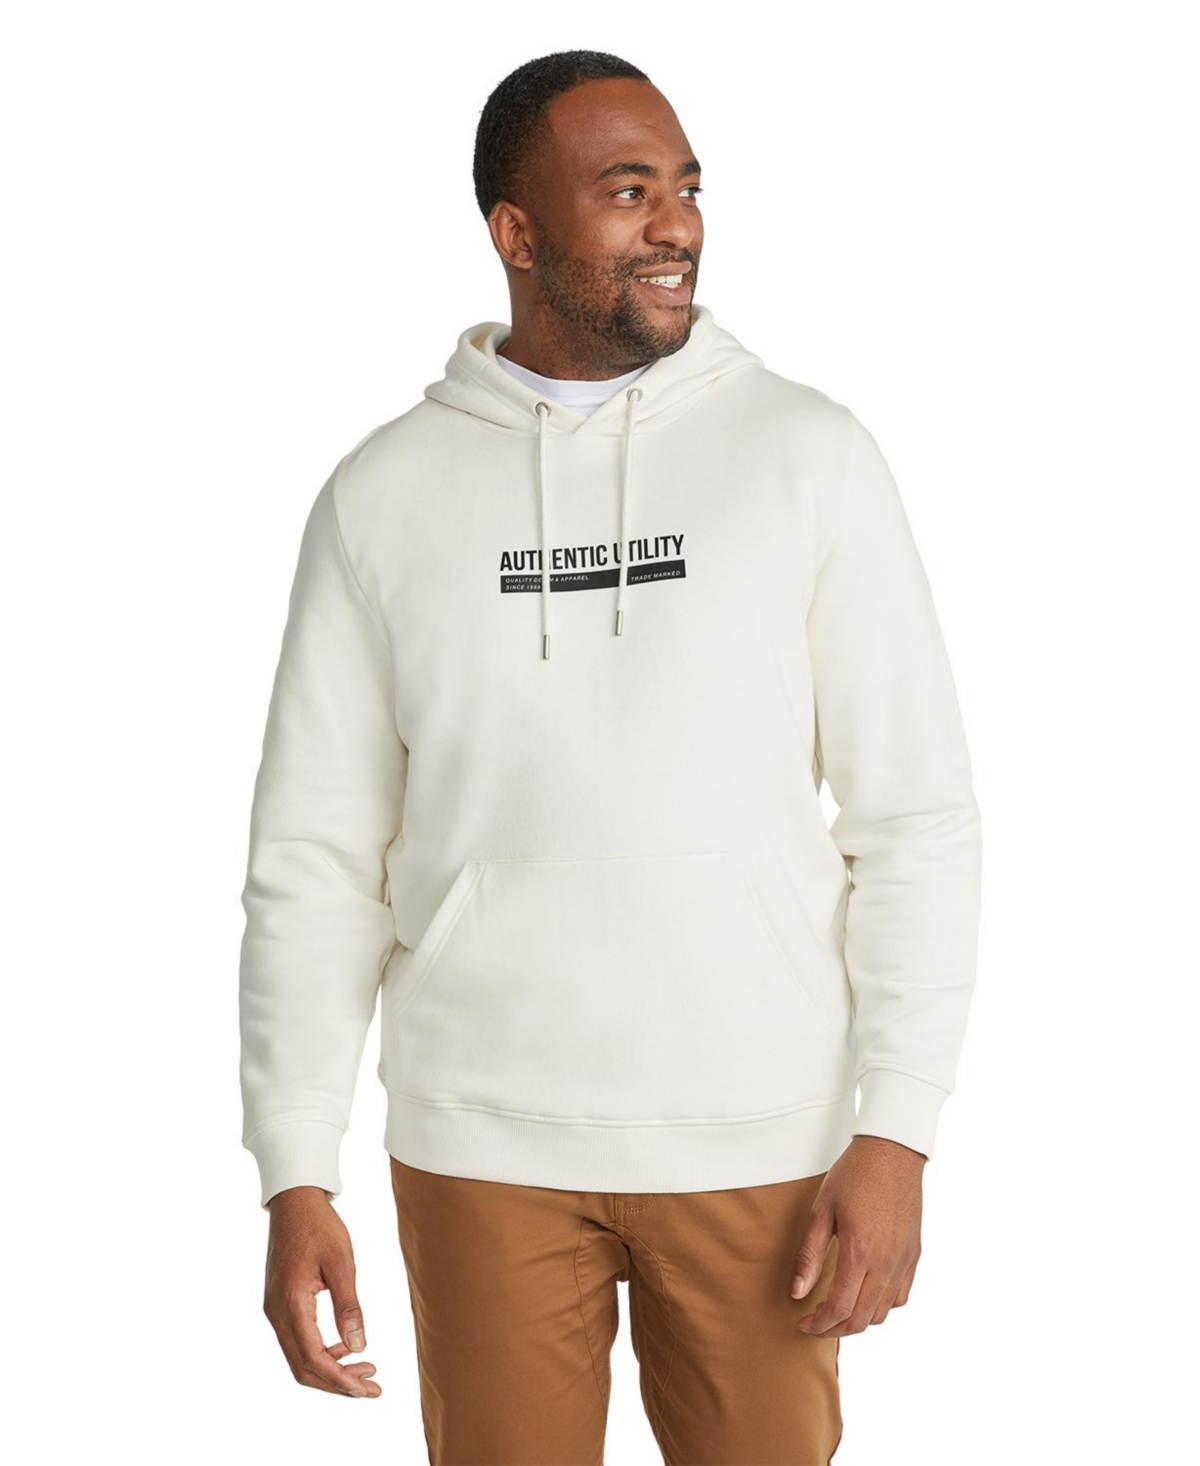 Mens Authentic Utility Hoodie Sweatshirt - Ivory